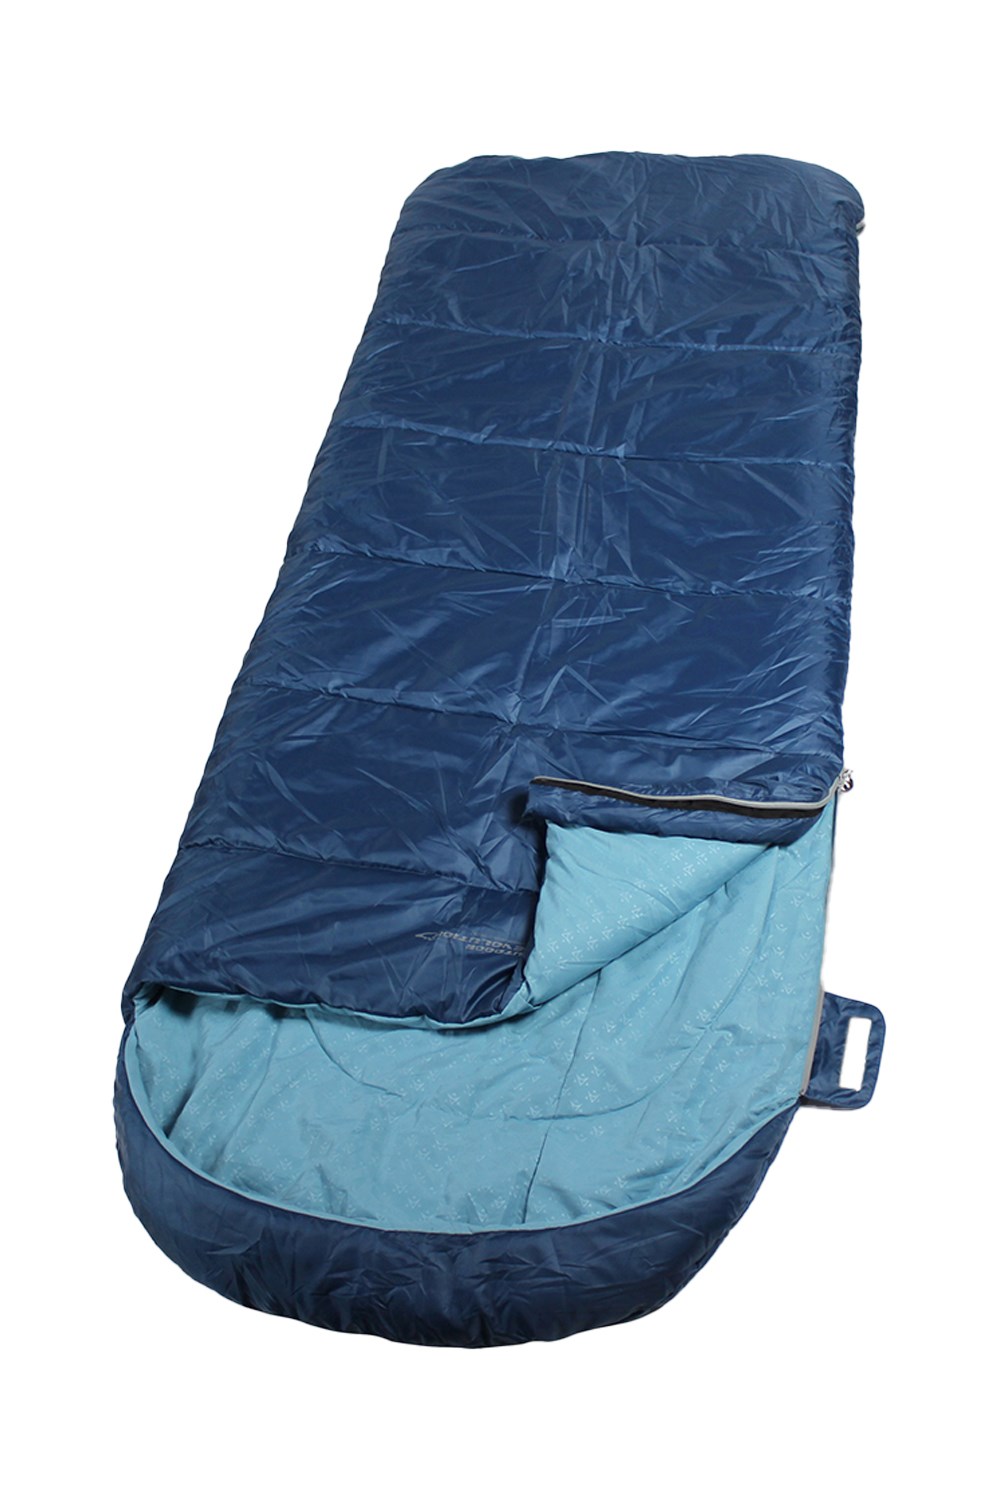 Campstar Single 300 DL Sleeping Bag -